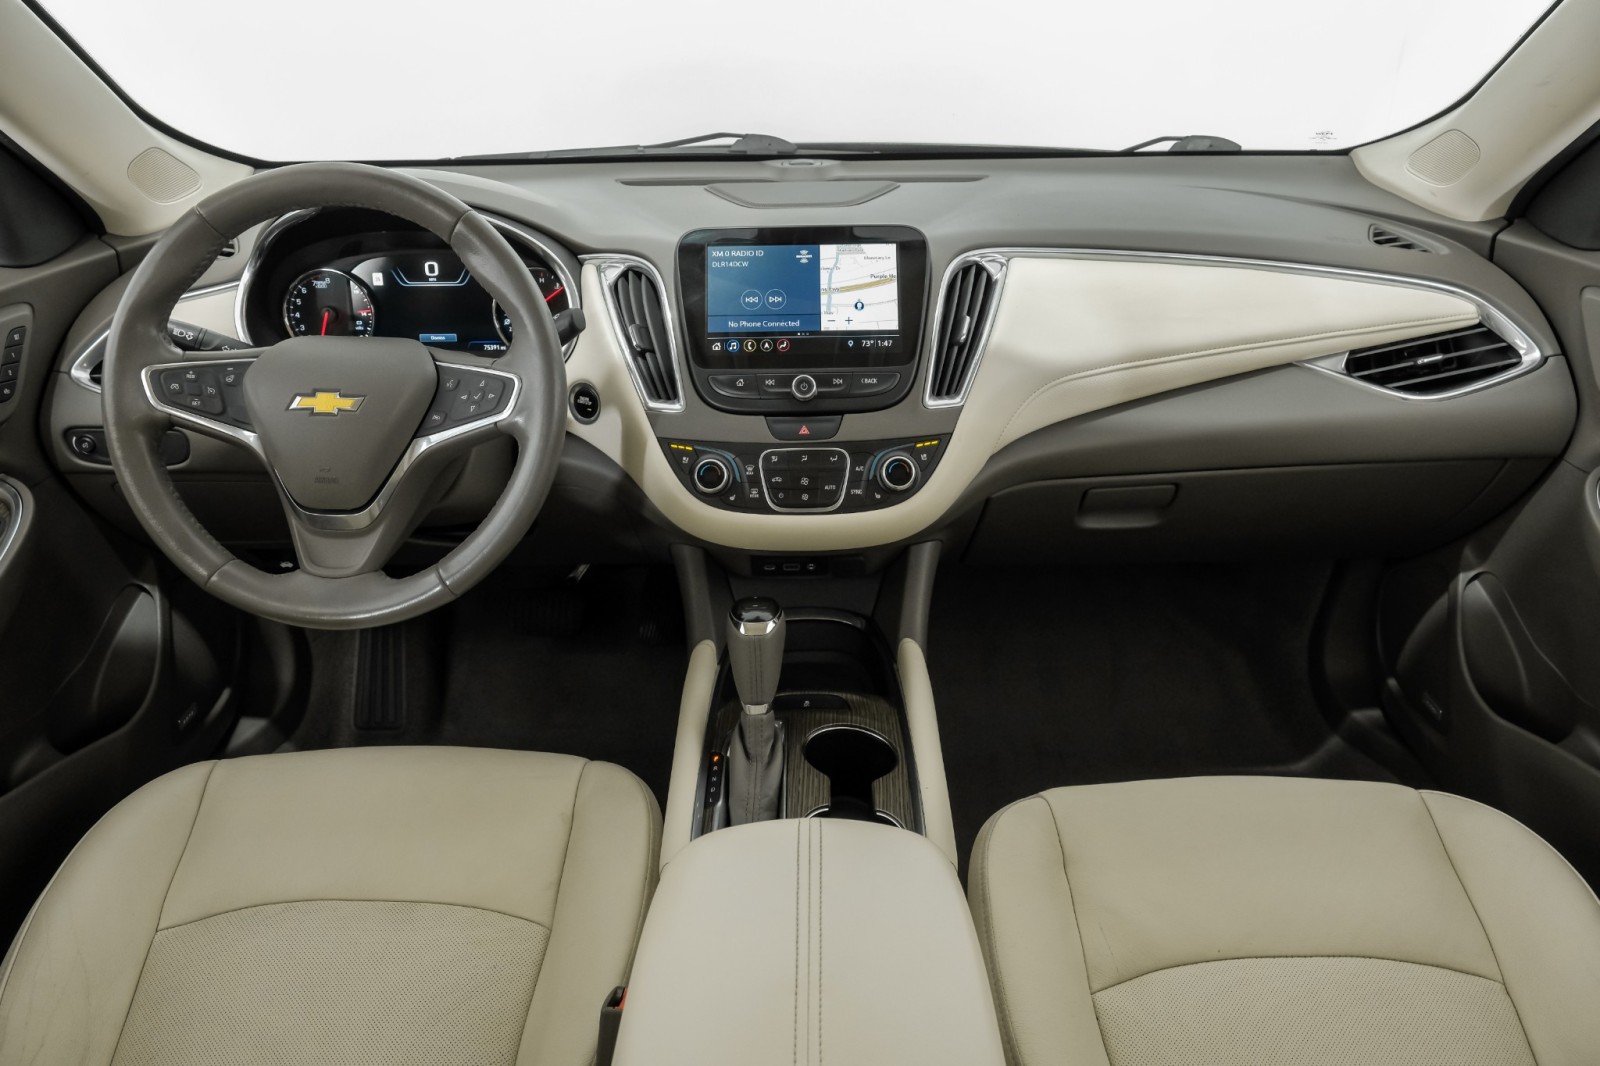 2019 Chevrolet Malibu PREMIER NAVIGATION LEATHER SEATS REAR CAMERA KEYEL 17